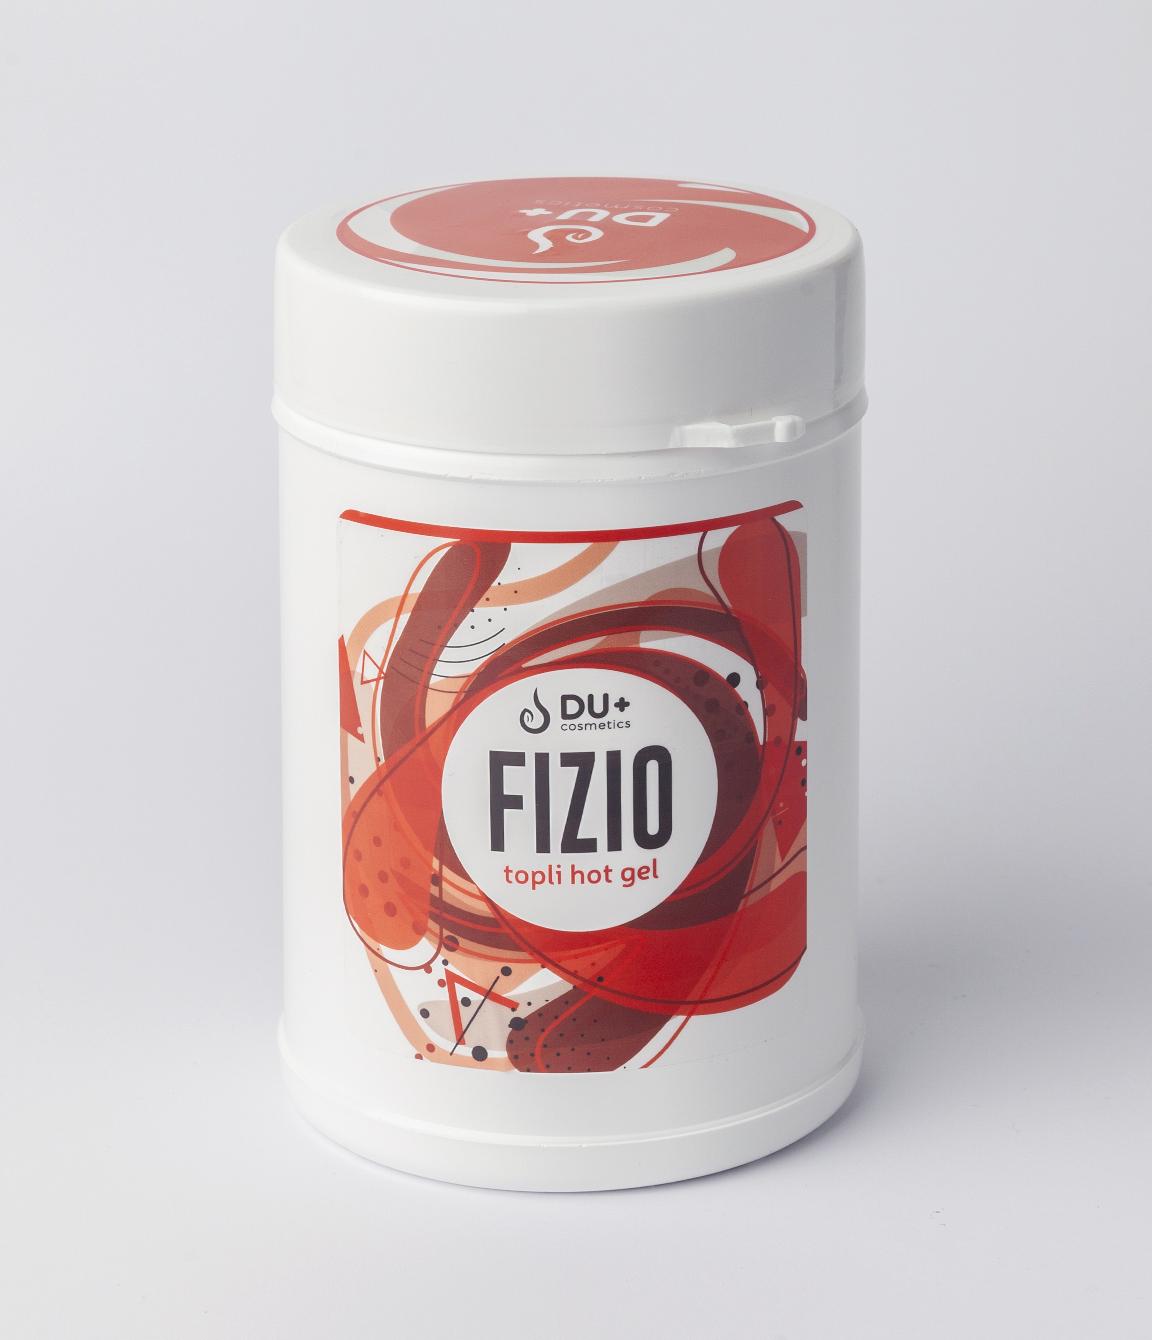 Selected image for Du+ Cosmetics Fizio Topli HOT gel, 1kg